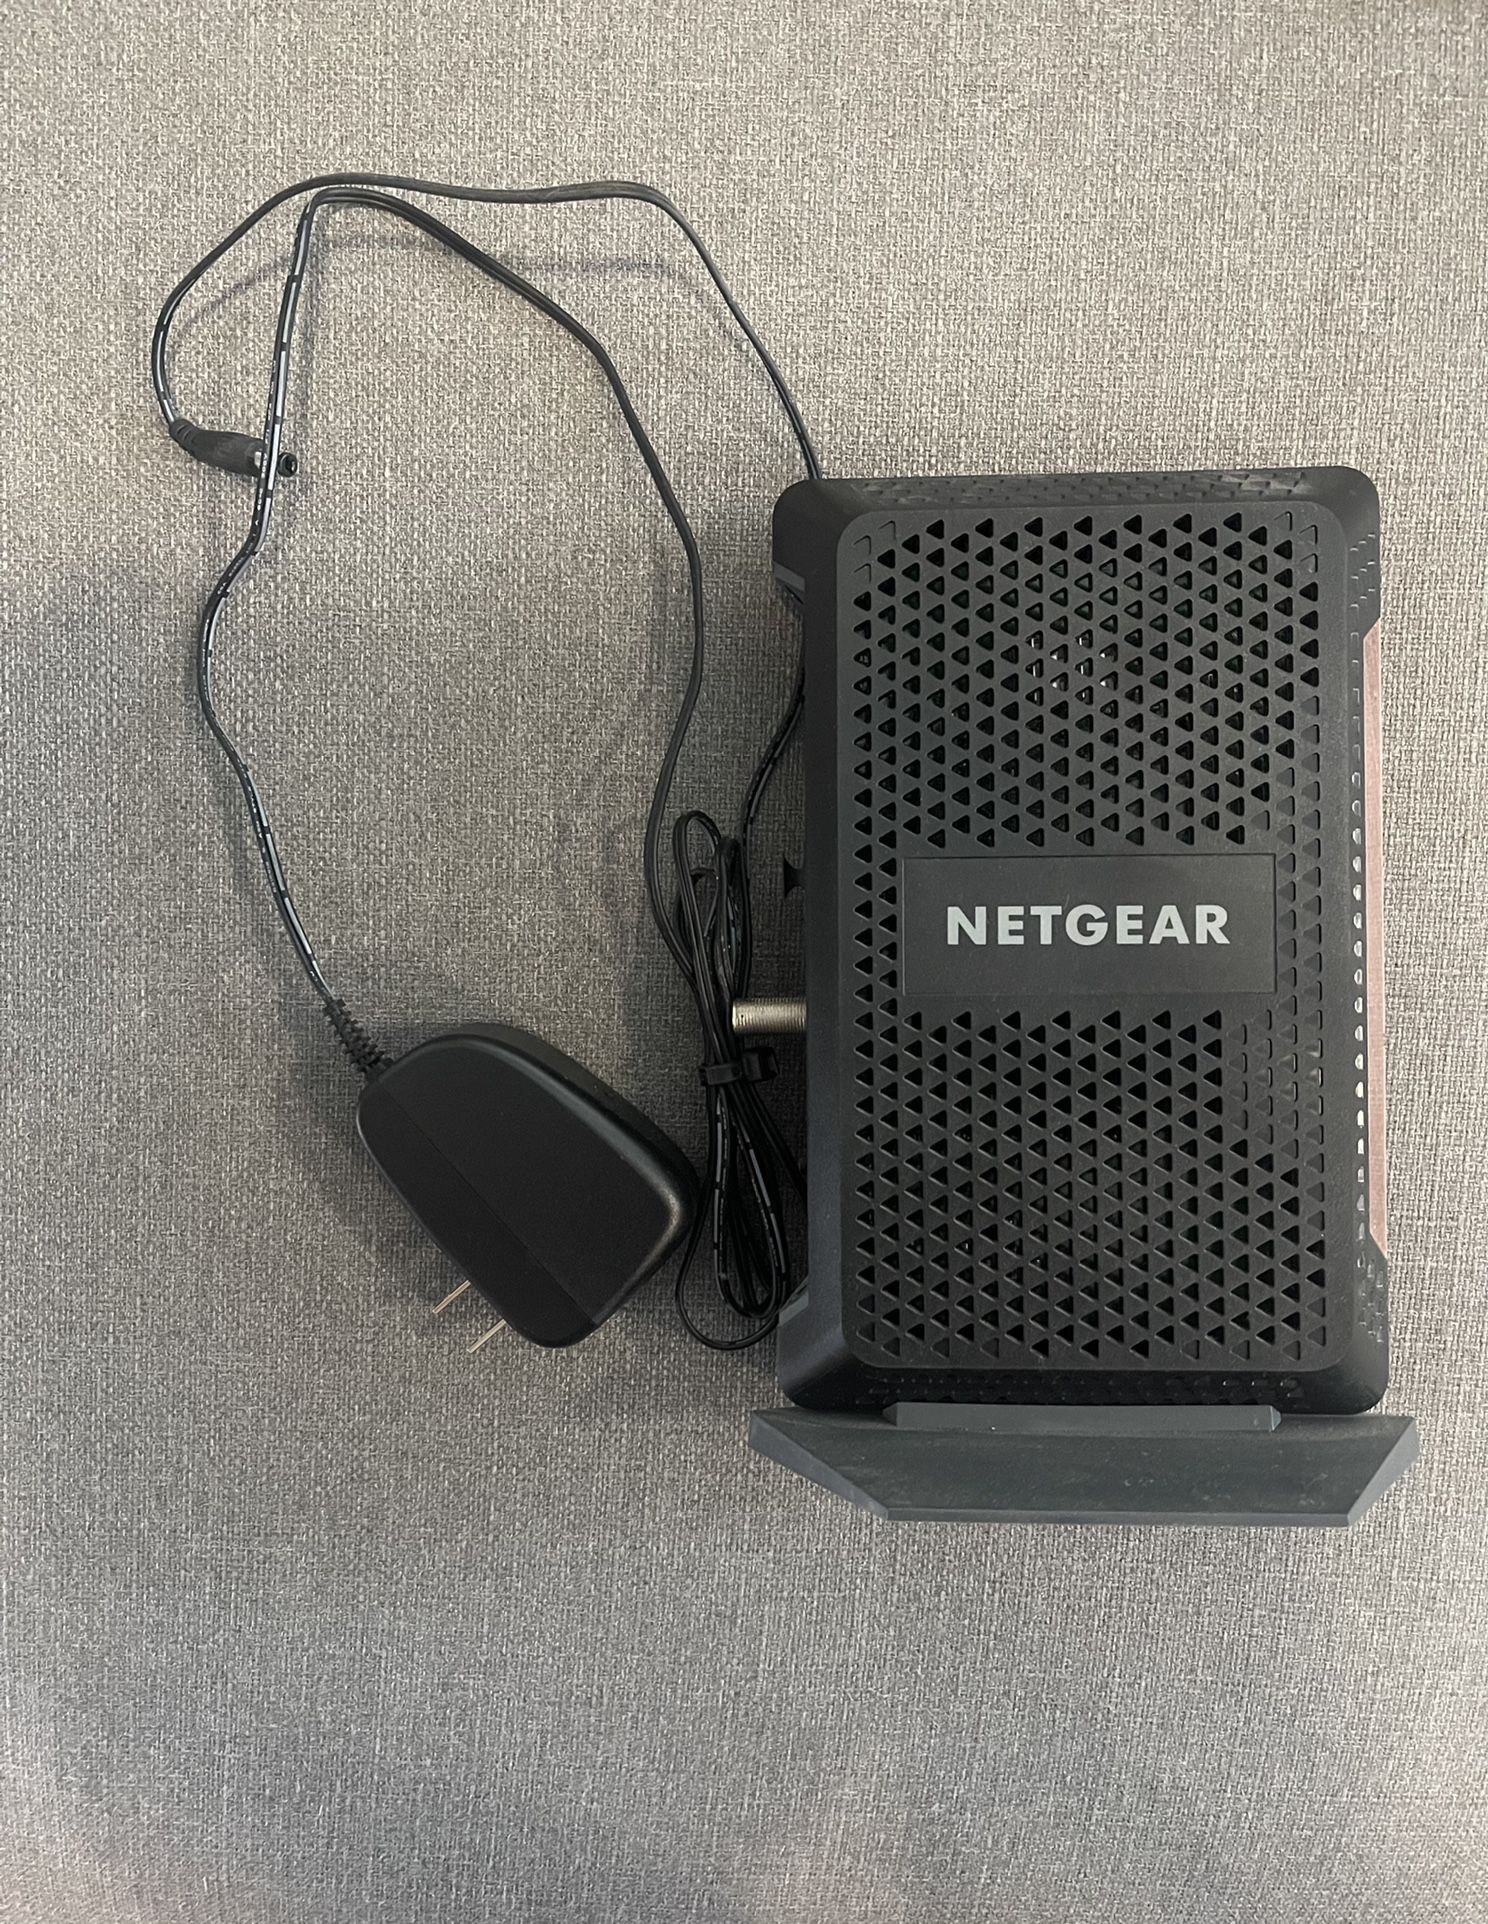 NETGEAR - Nighthawk DOCSIS 3.1 Cable Modem